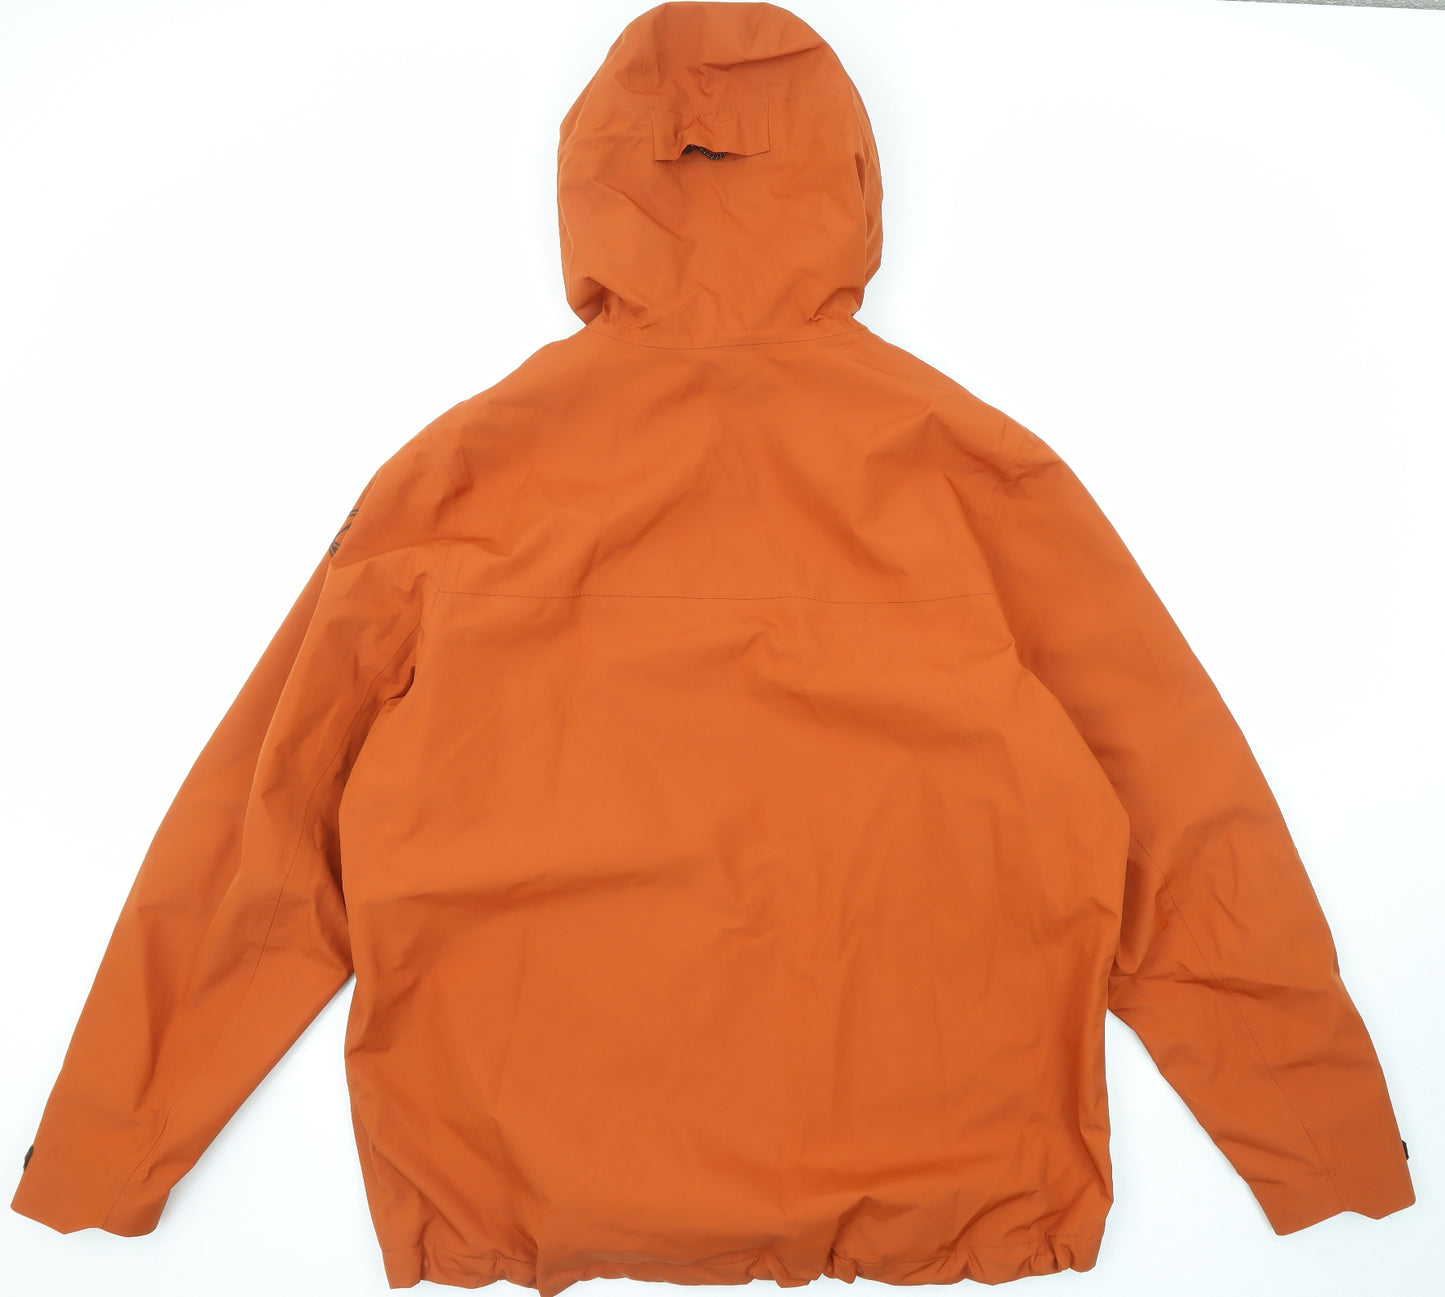 Marks and Spencer Mens Orange Jacket Size XL Zip